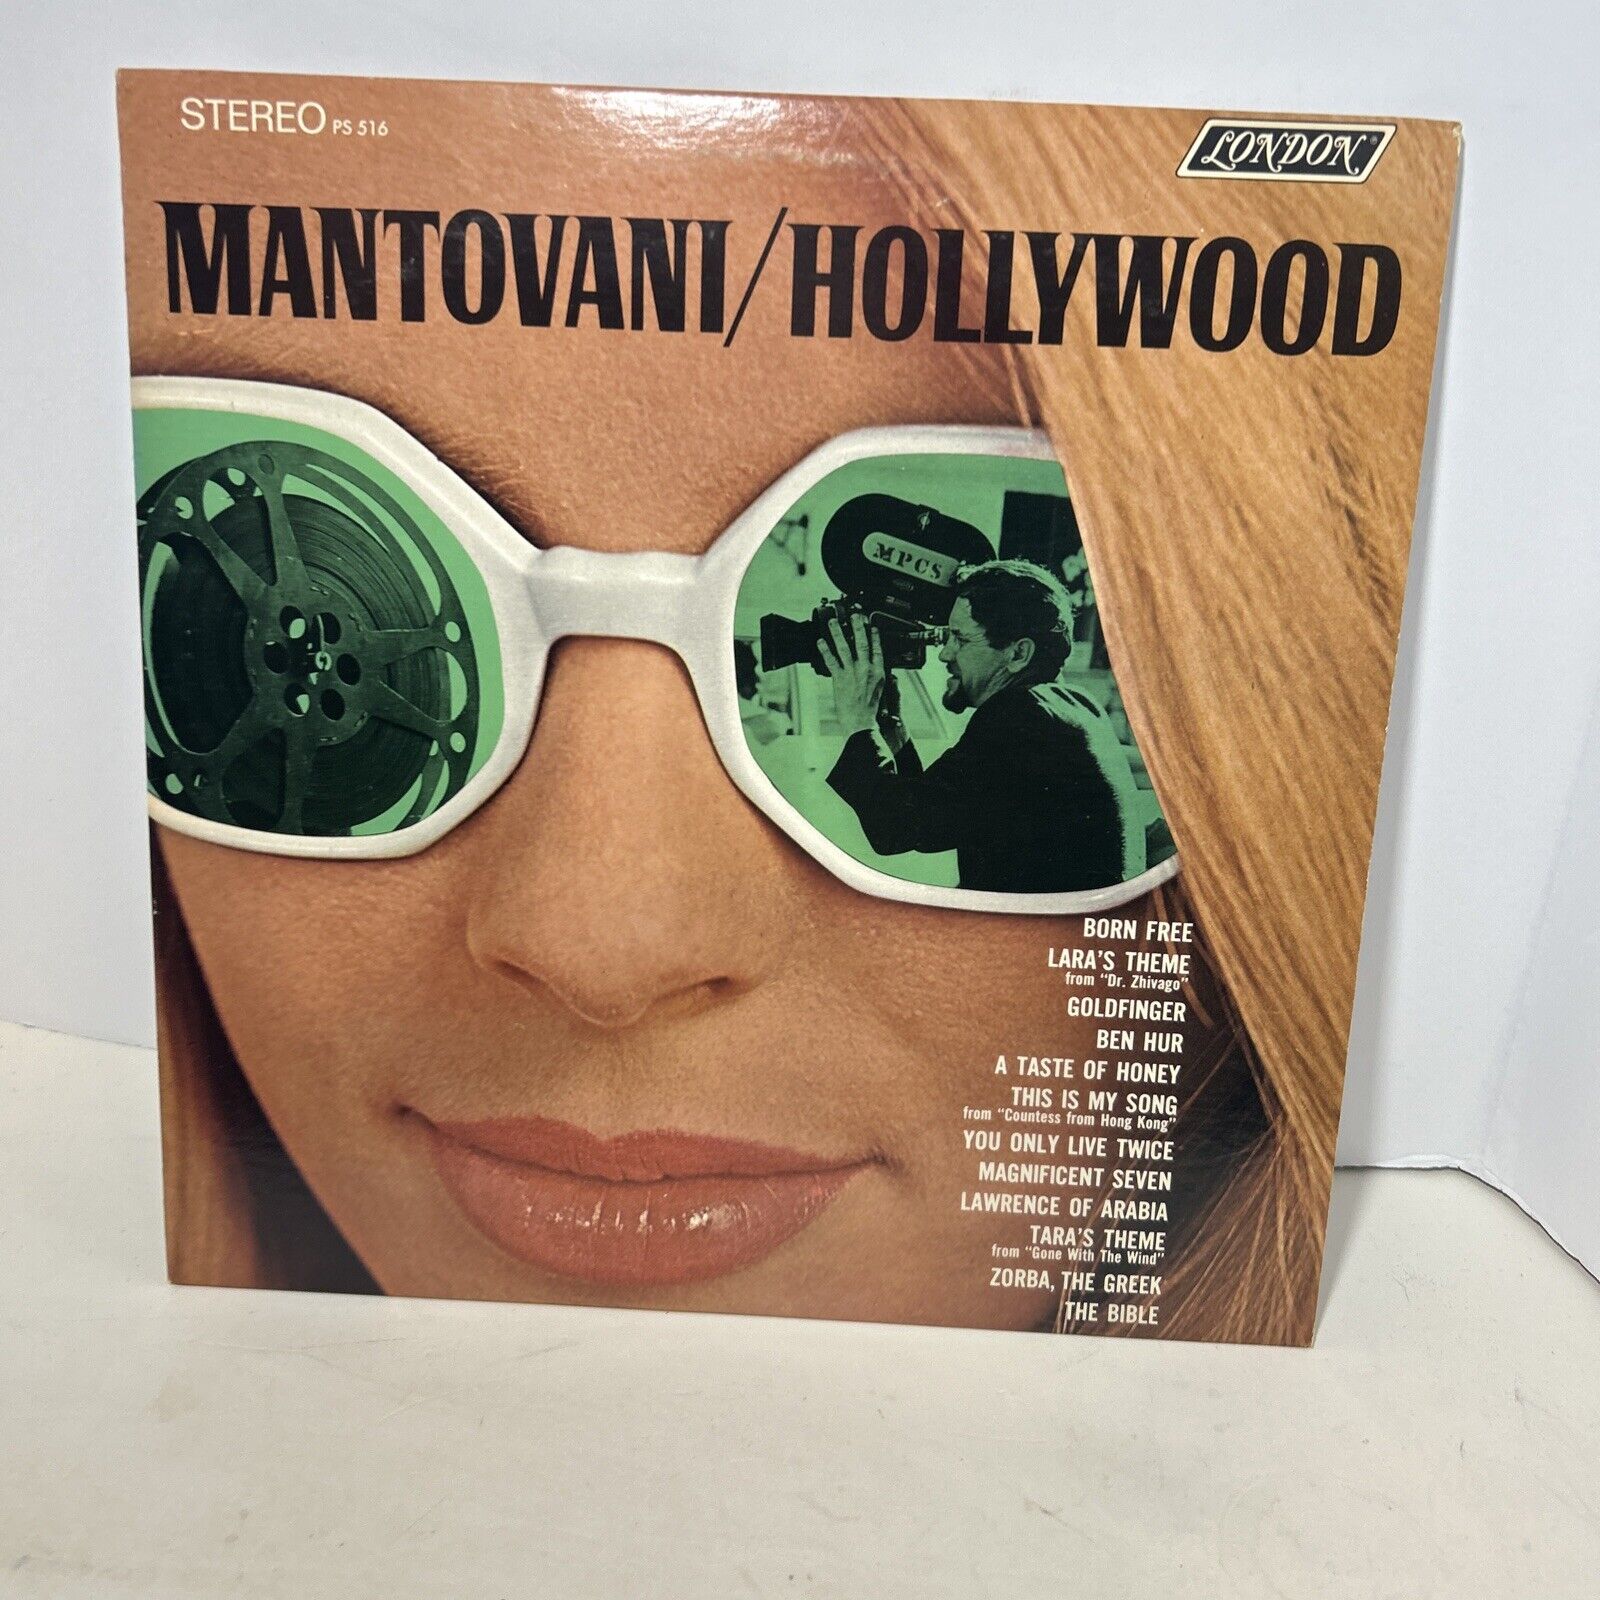 Mantovani Hollywood (Vinyl, 1967) London PS 516 VG LP Record Album